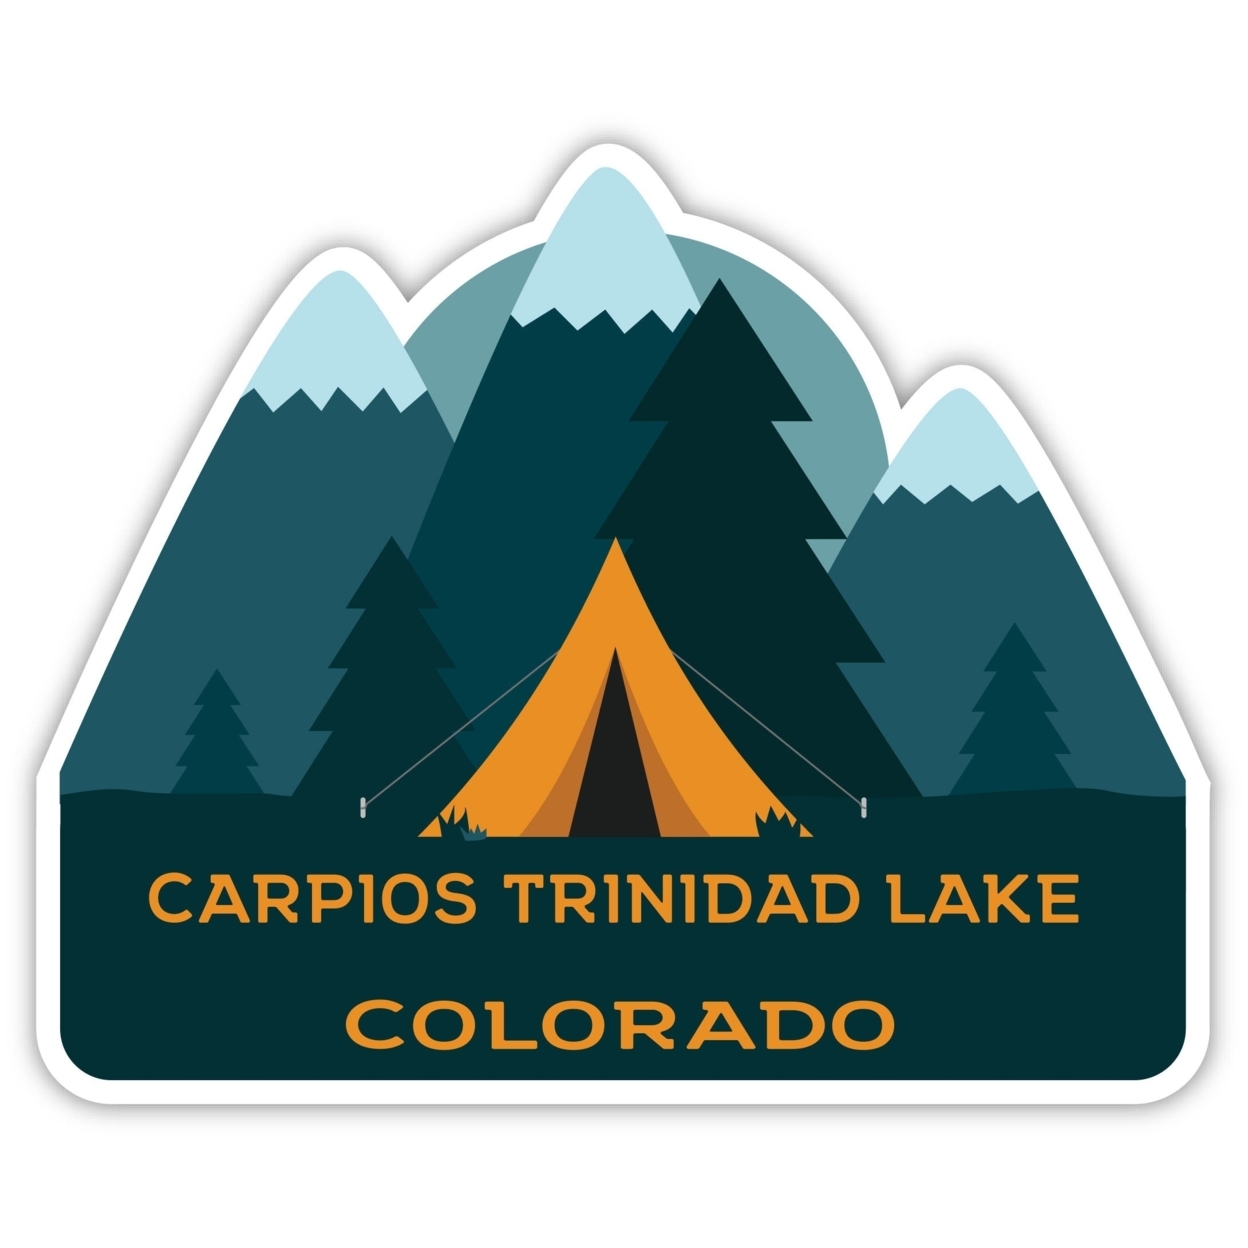 Carpios Trinidad Lake Colorado Souvenir Decorative Stickers (Choose Theme And Size) - Single Unit, 10-Inch, Tent